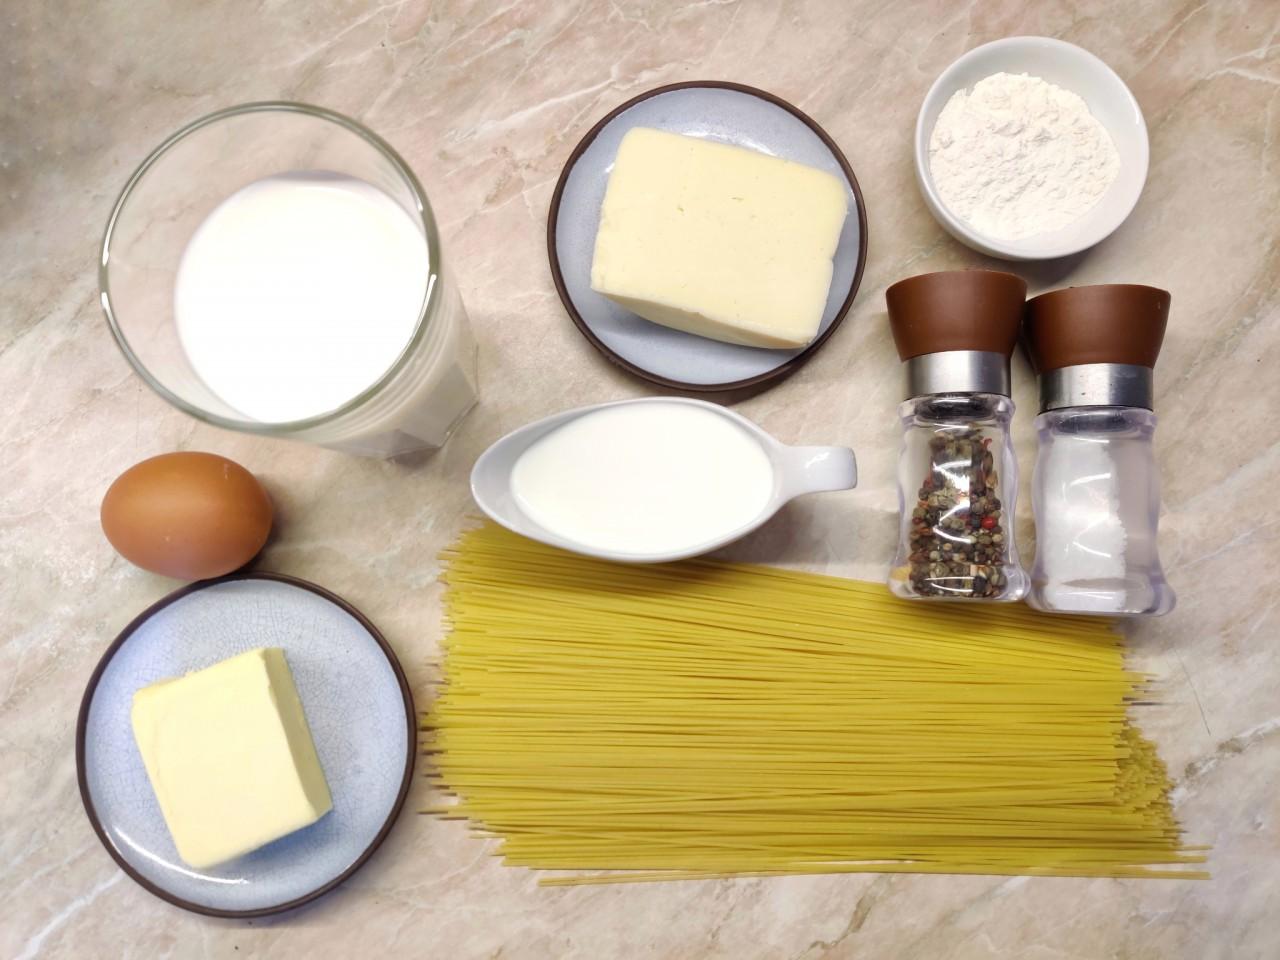 Сырный молоко макароны. Сырная мука. Молоко, сыр, яйца, спагетти. Спагетти молоко сыр. Яйцо молоко соль сыр сливочное масло.